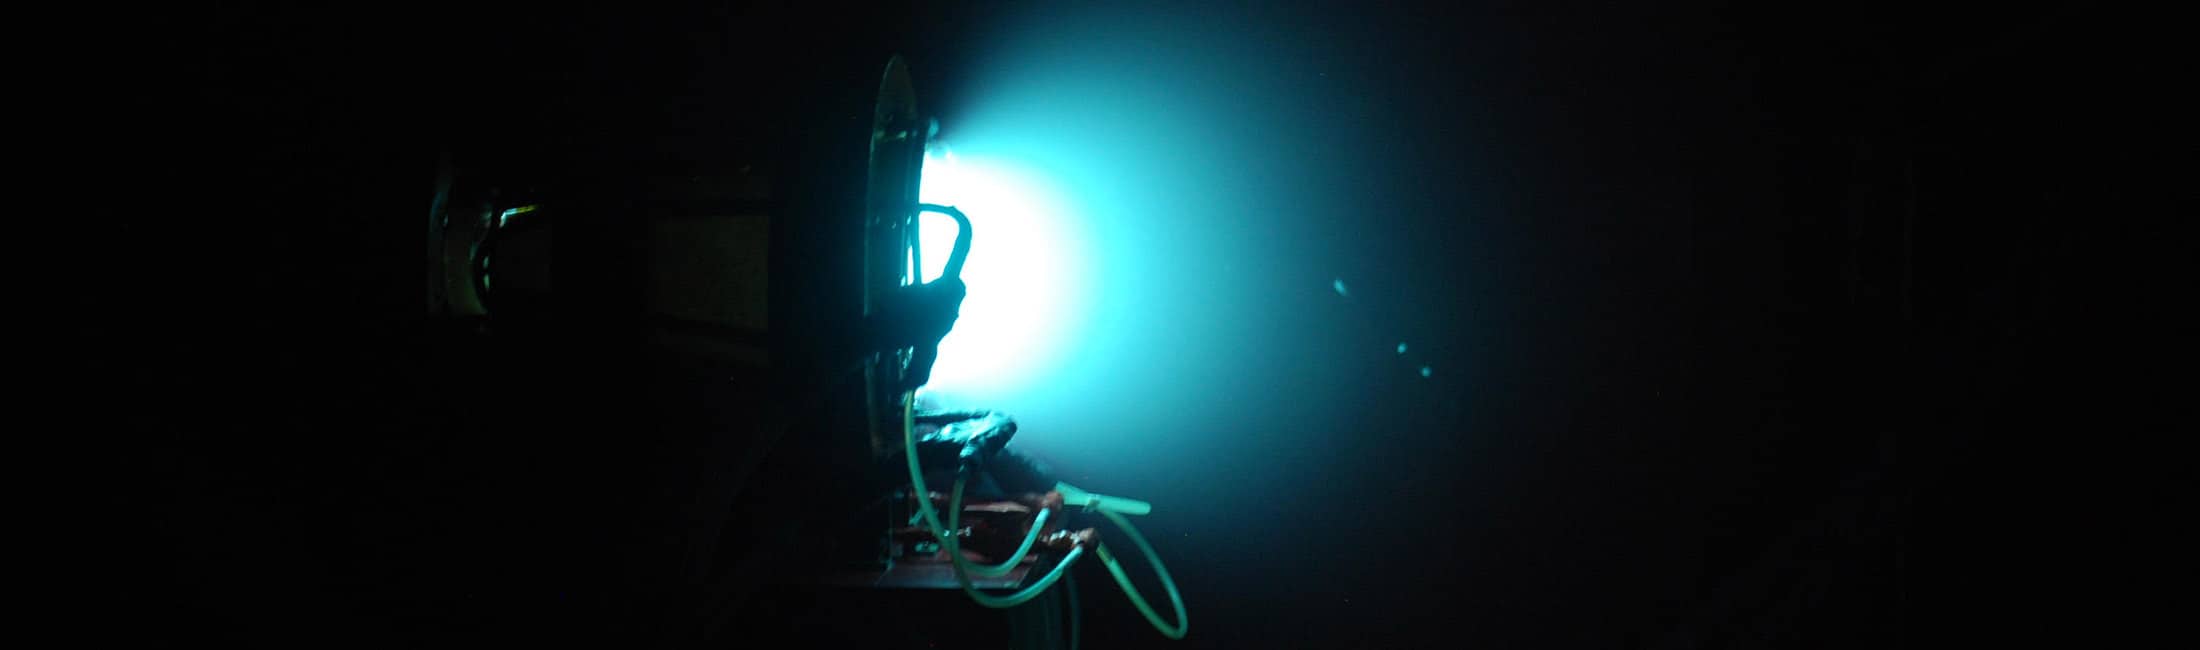 Thruster illuminated with blue light